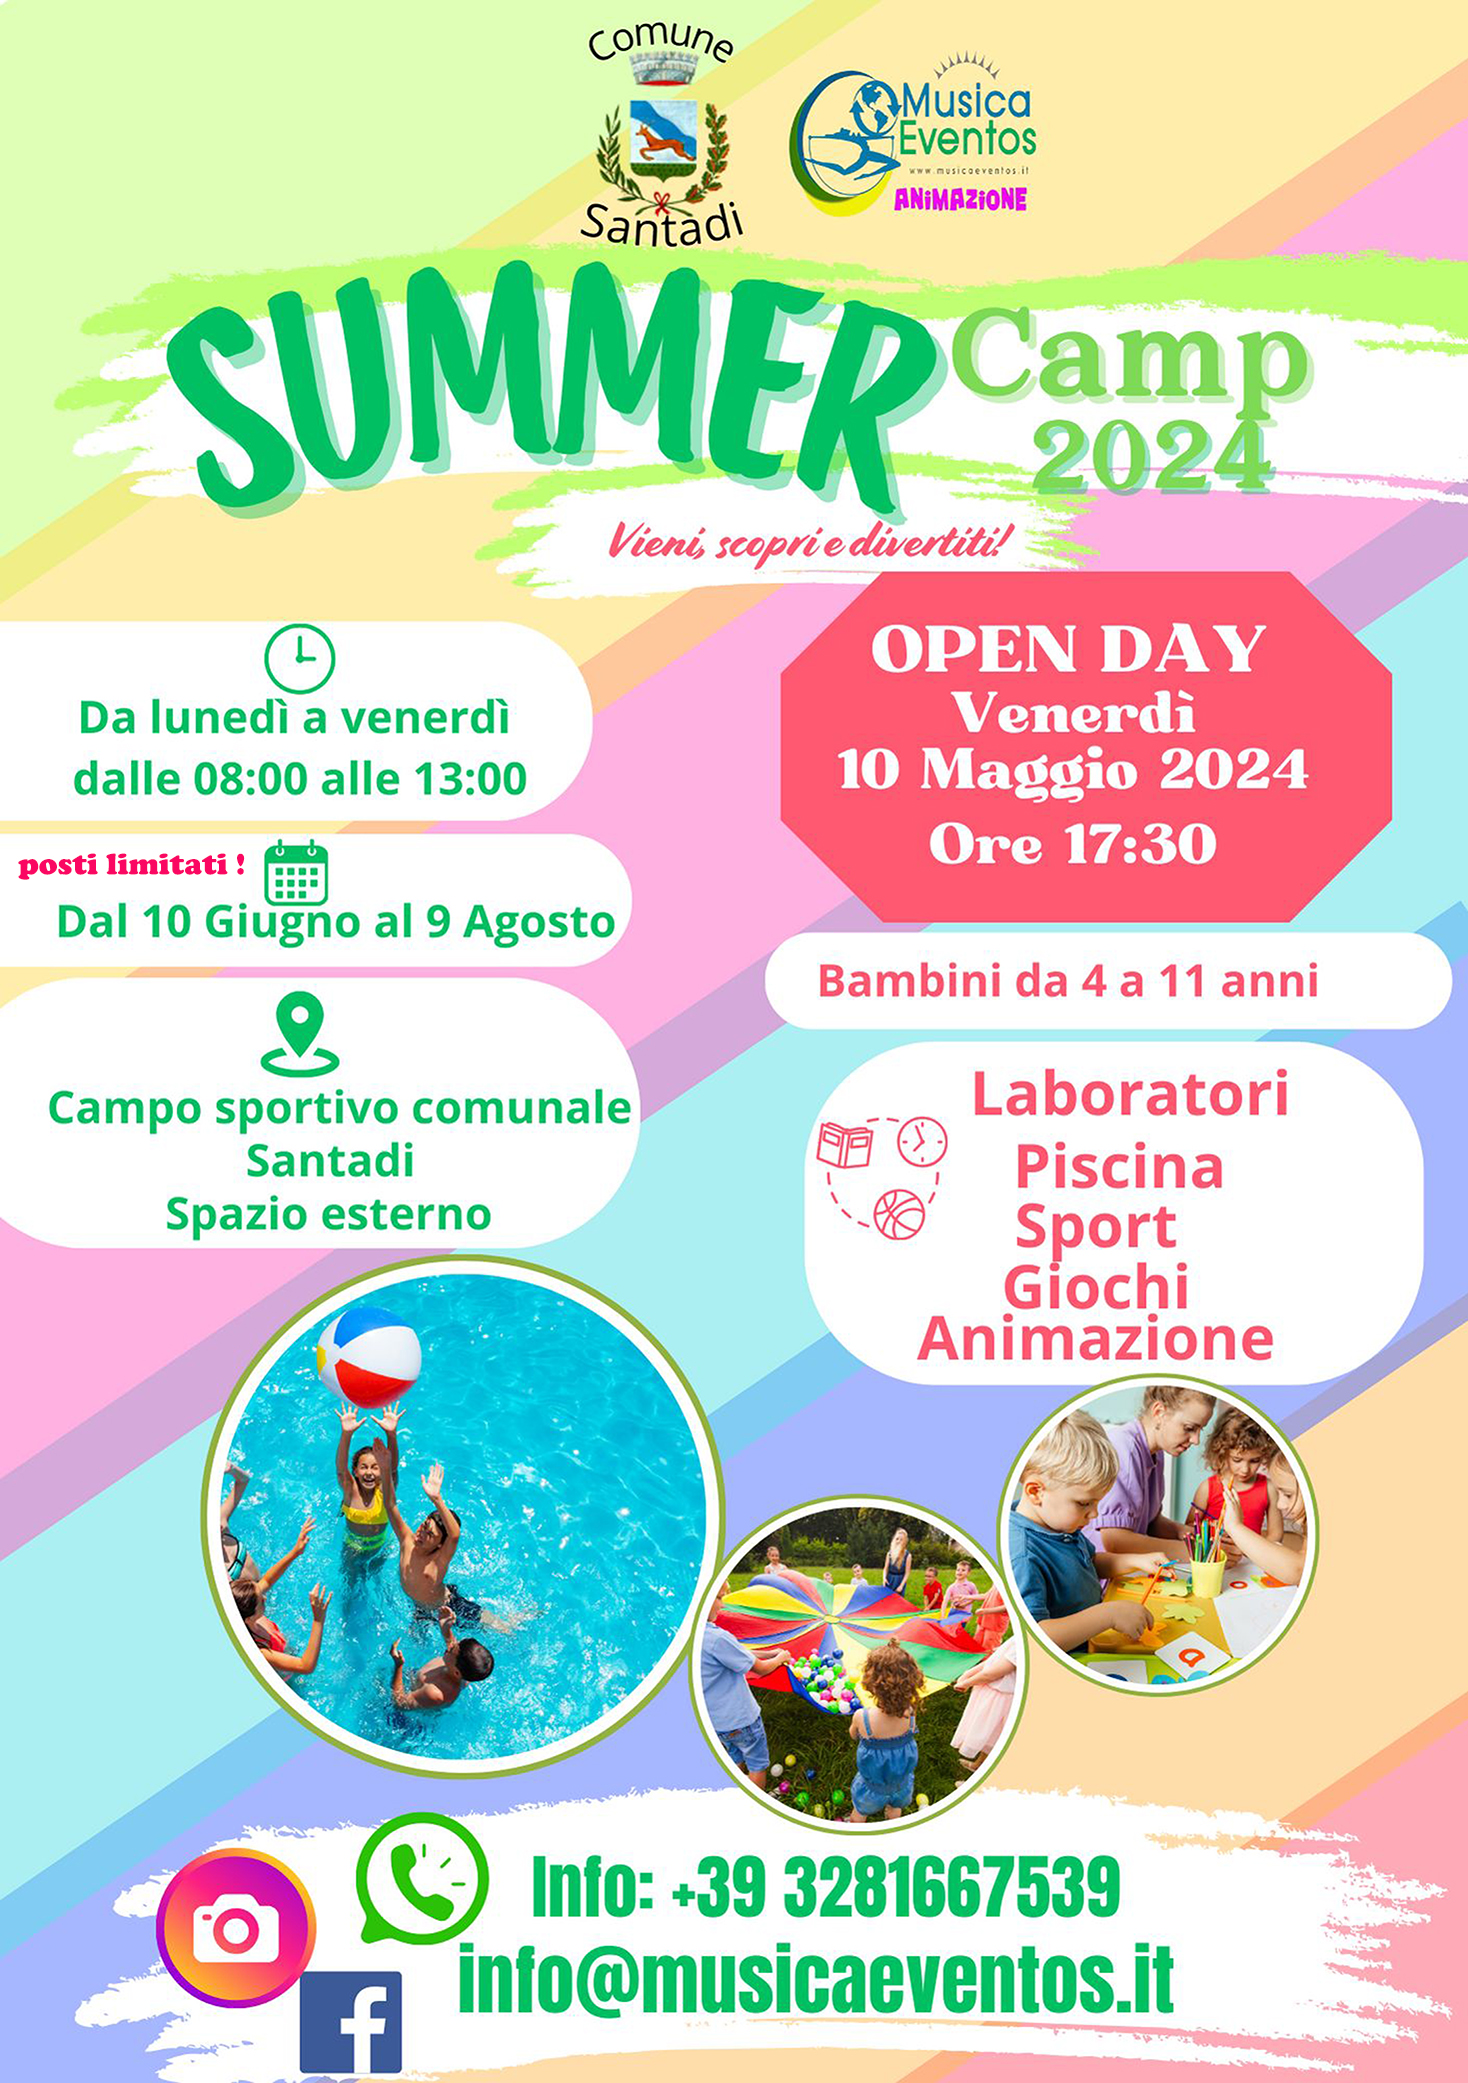 Summer Camp 2024 - Santadi